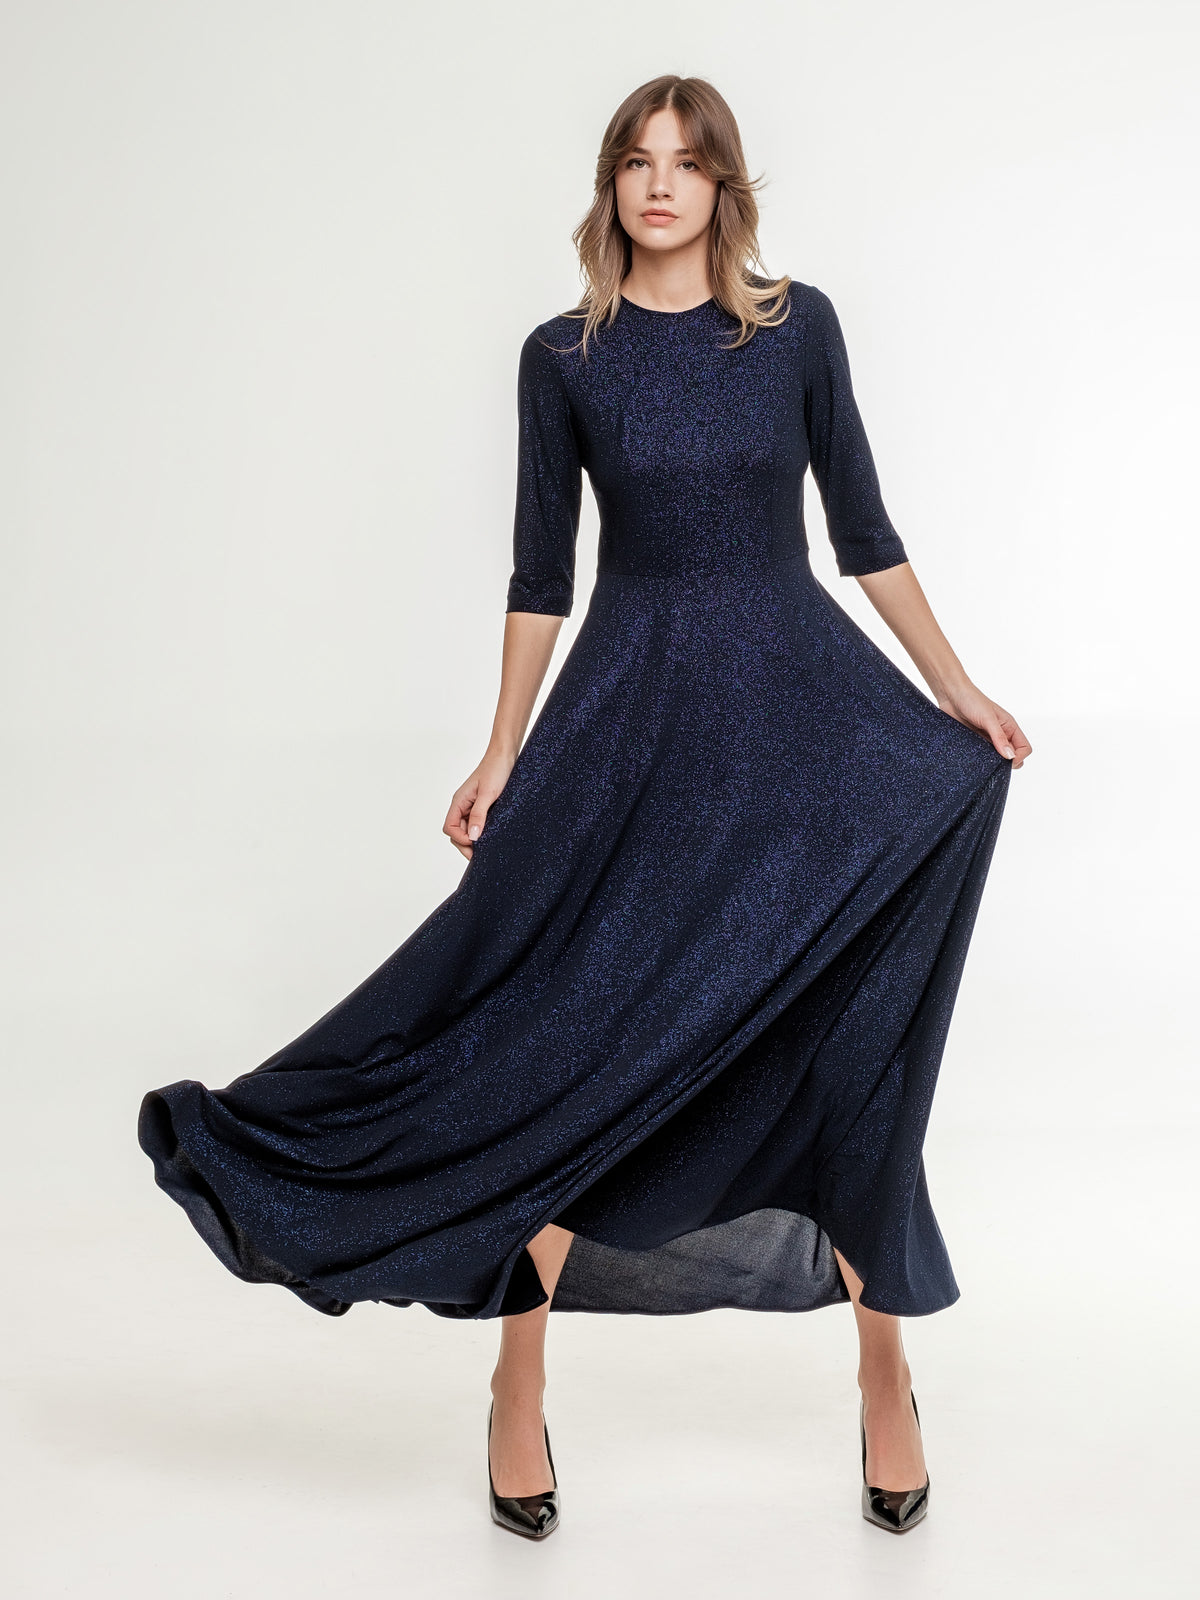 dark blue glittery long dress with back zipper wide skirt with underlining